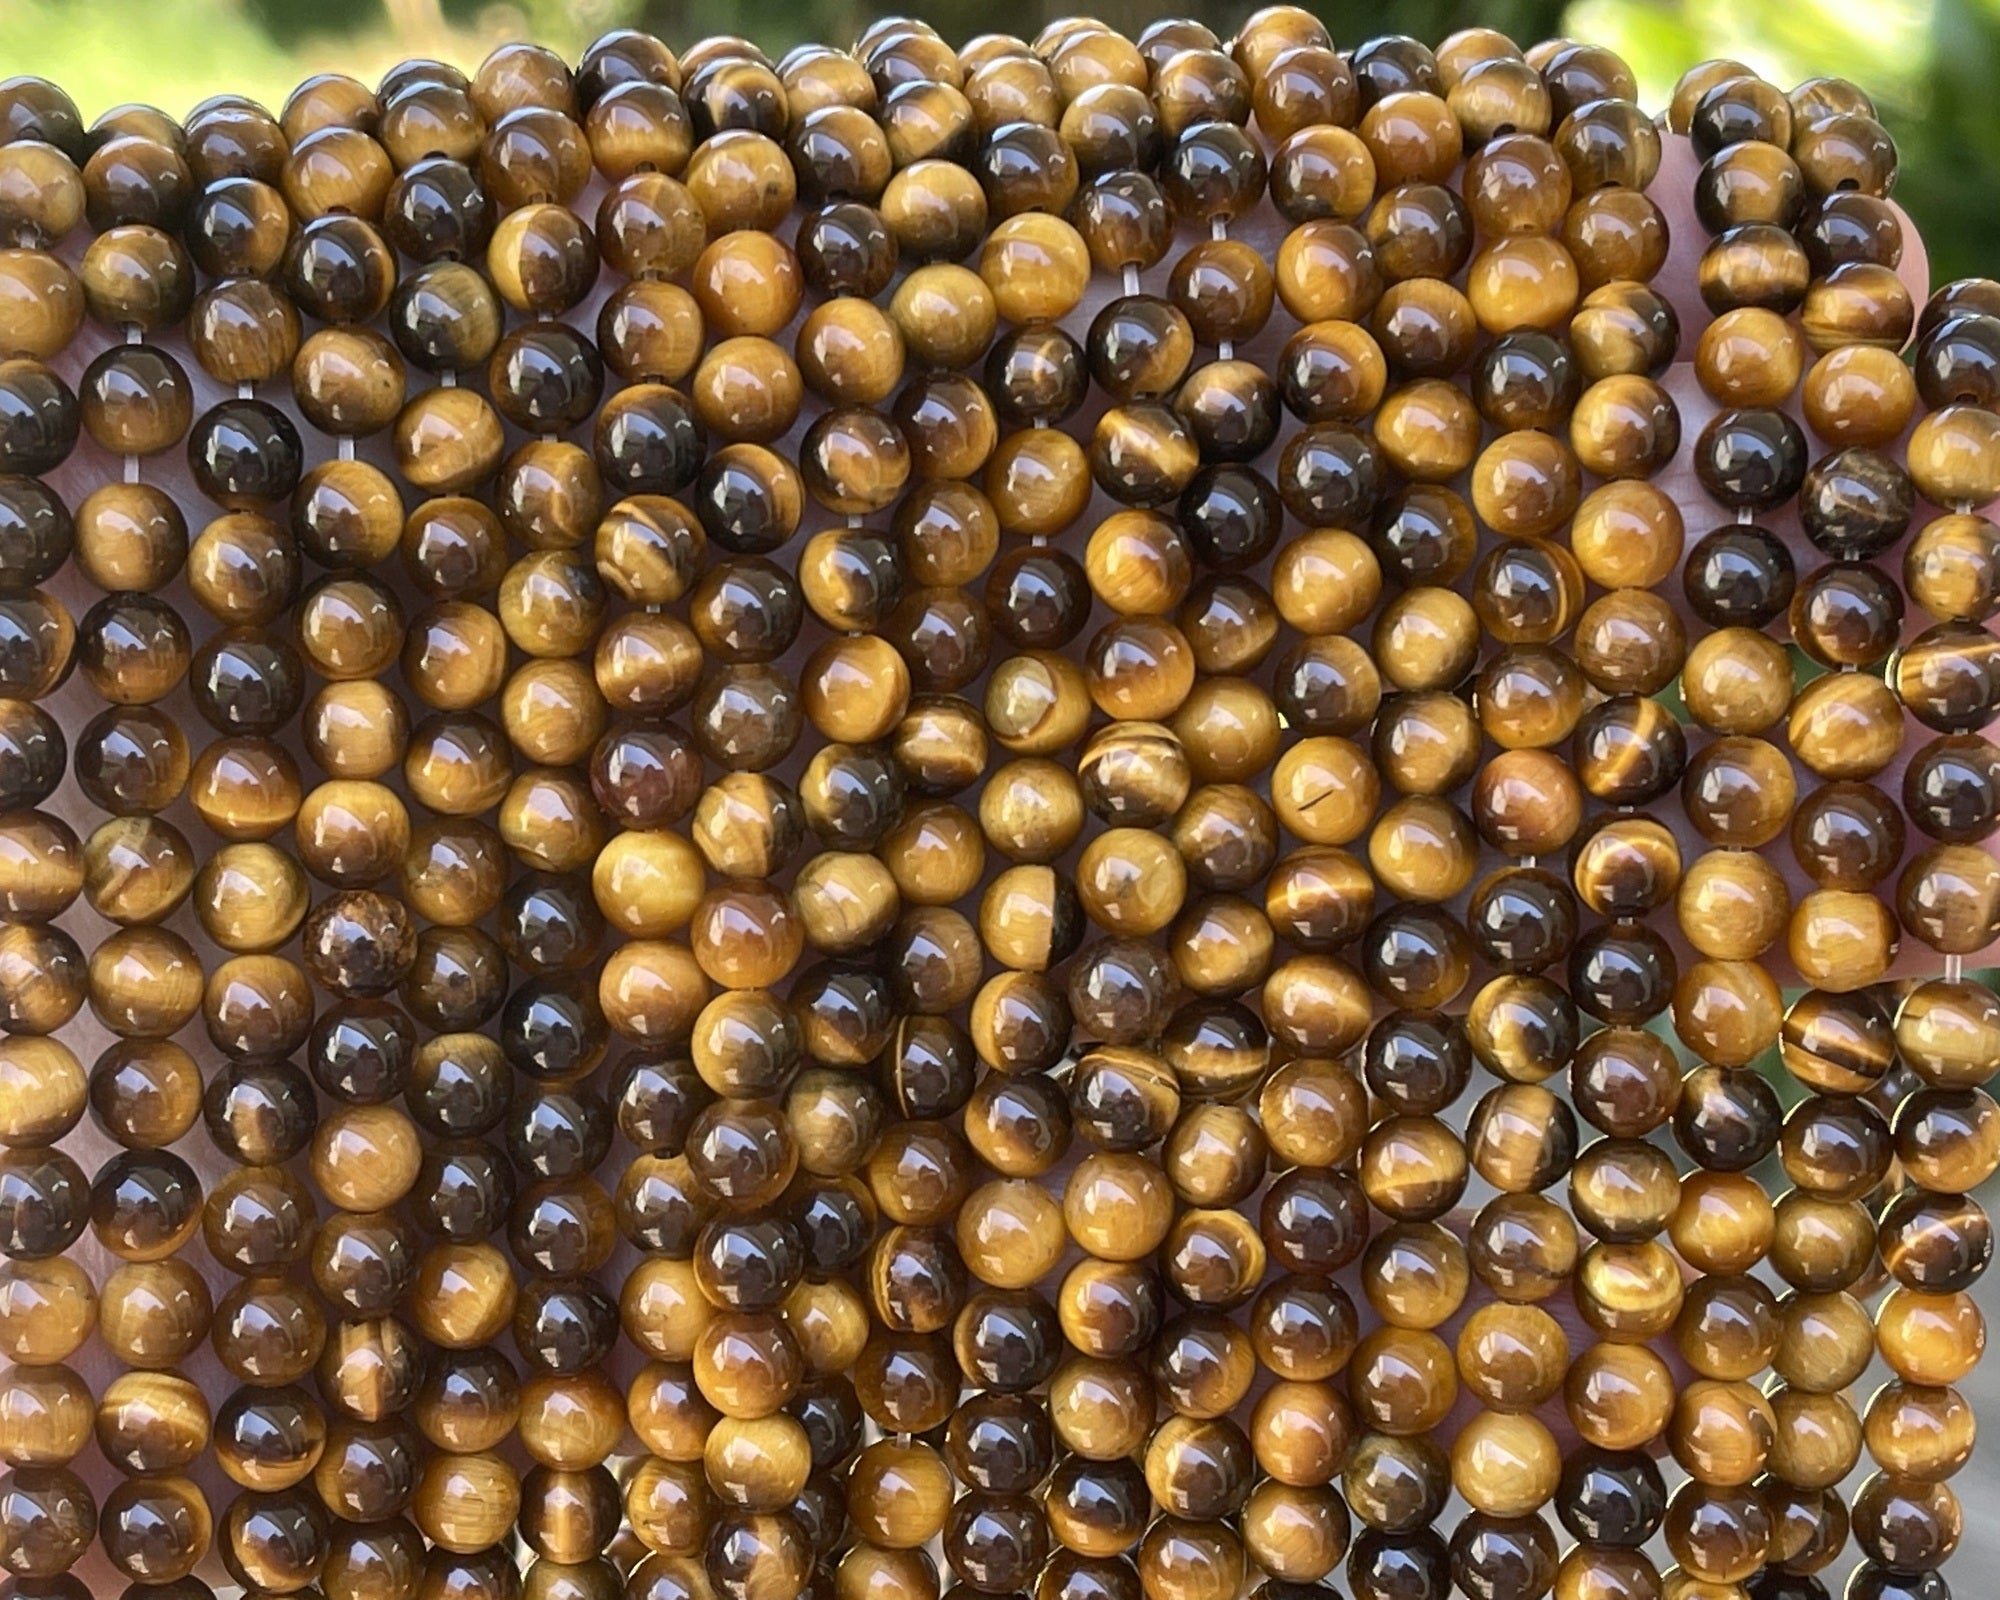 Yellow Tiger Eye 6mm round polished gemstone beads 15" strand - Oz Beads 